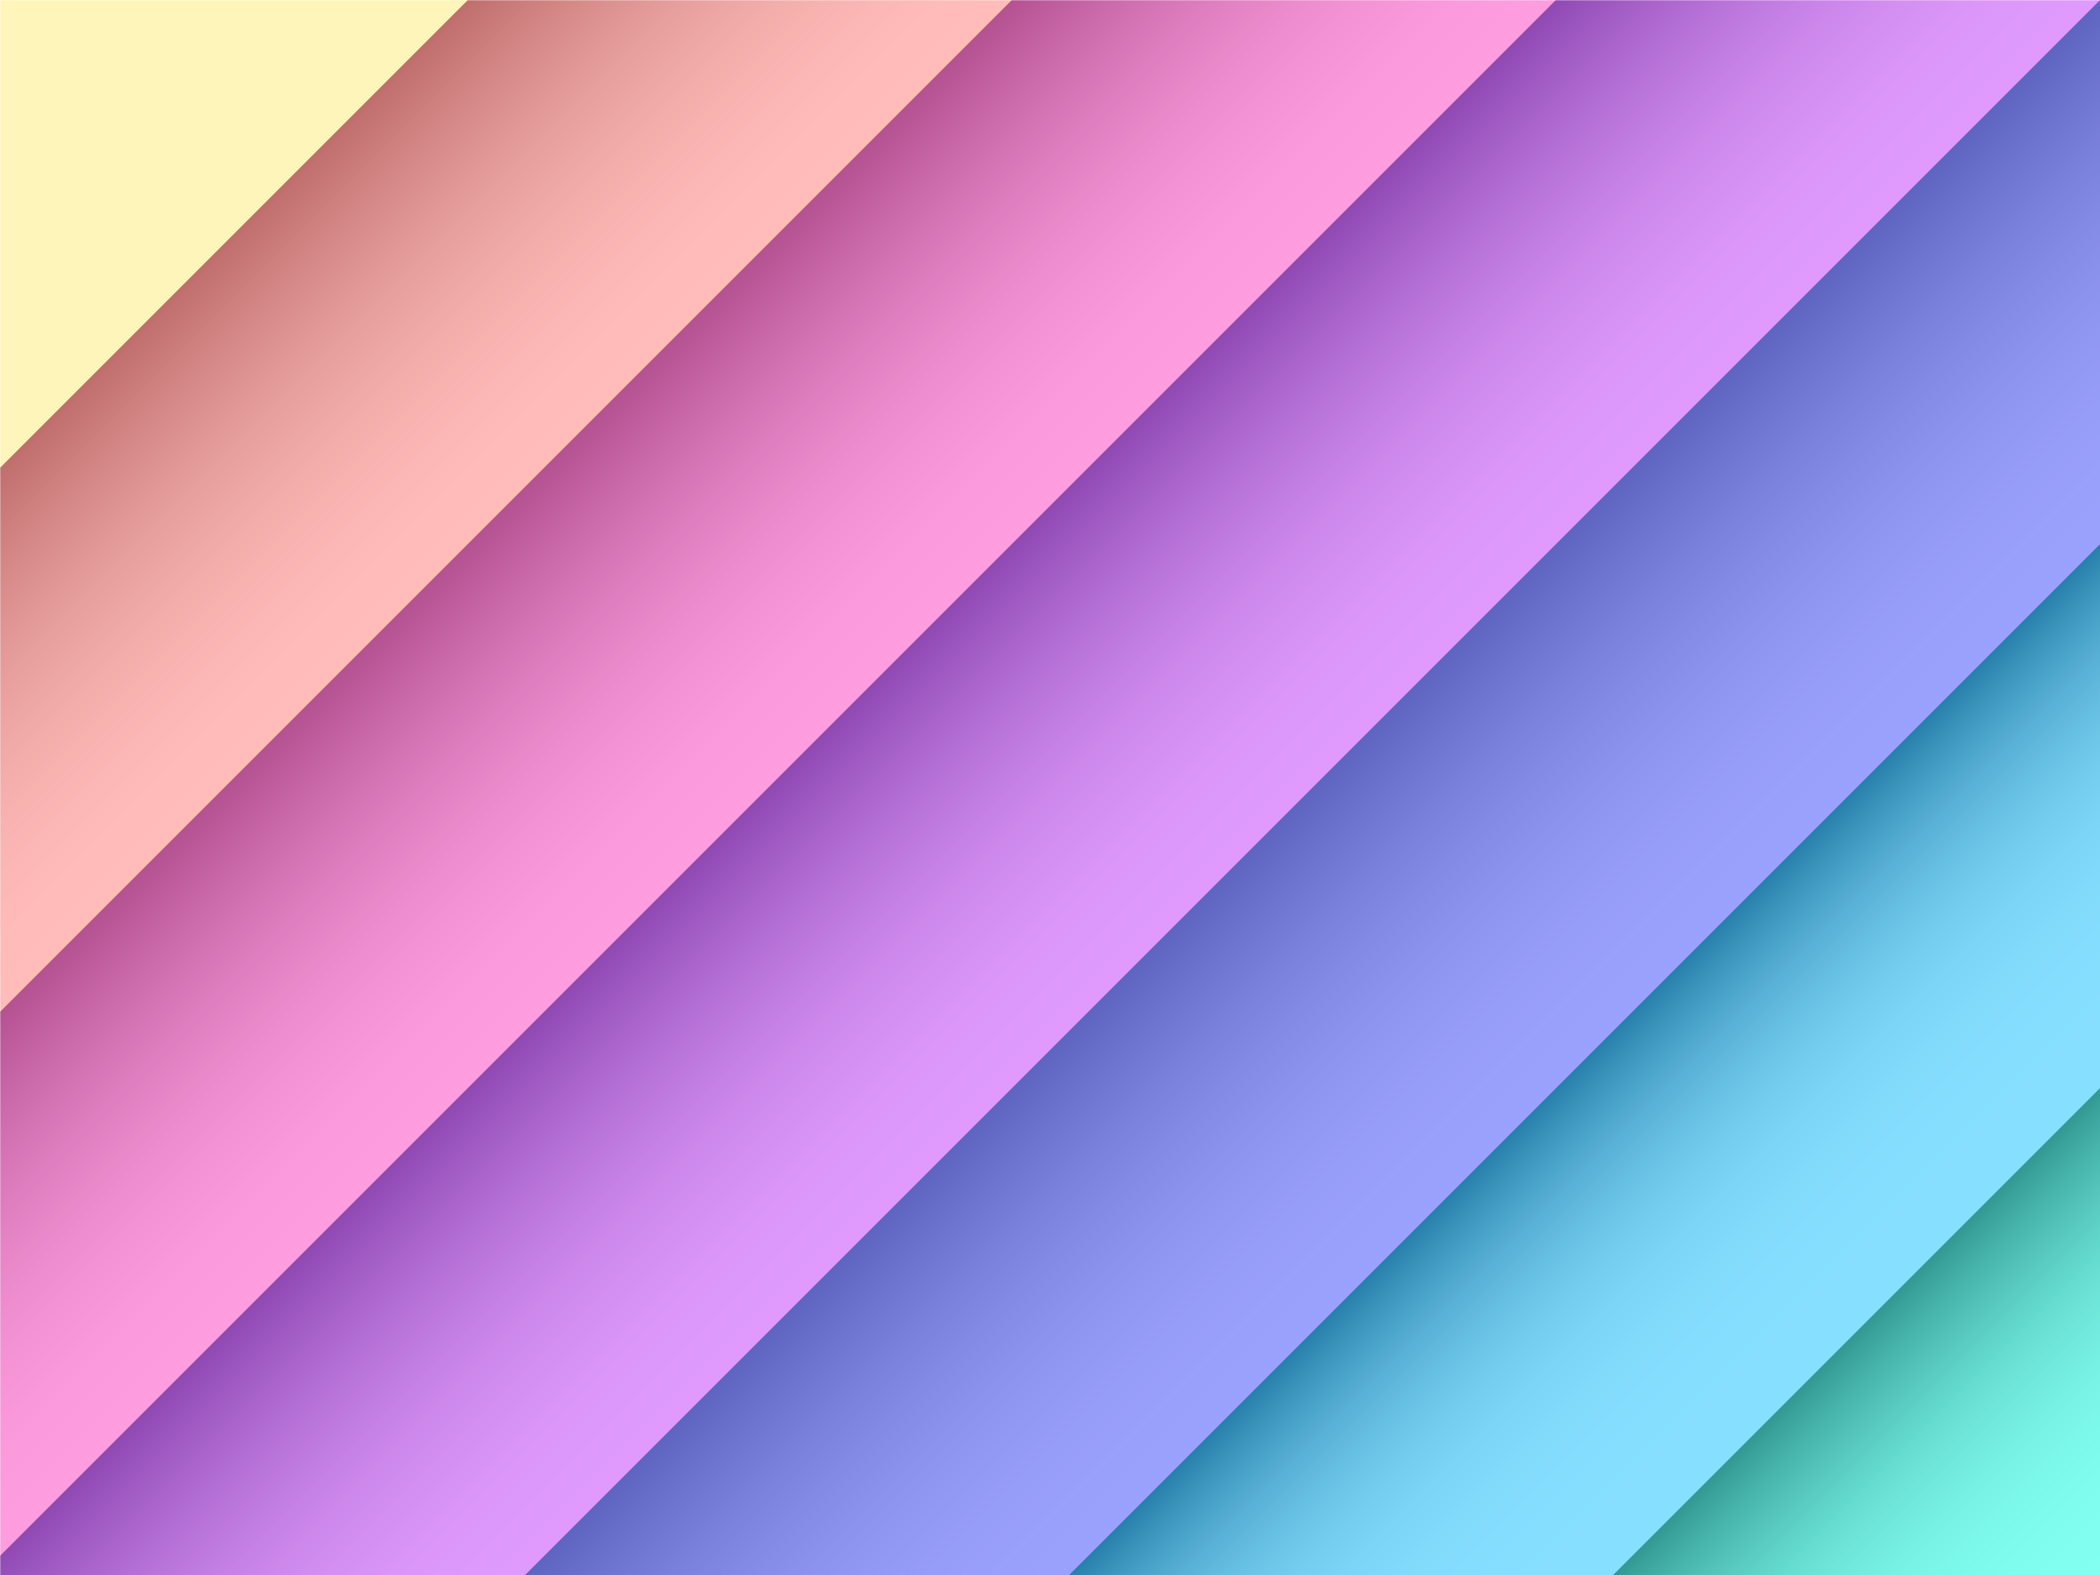 Pastel Rainbow Background Free Vector Art - (299 Free Downloads)